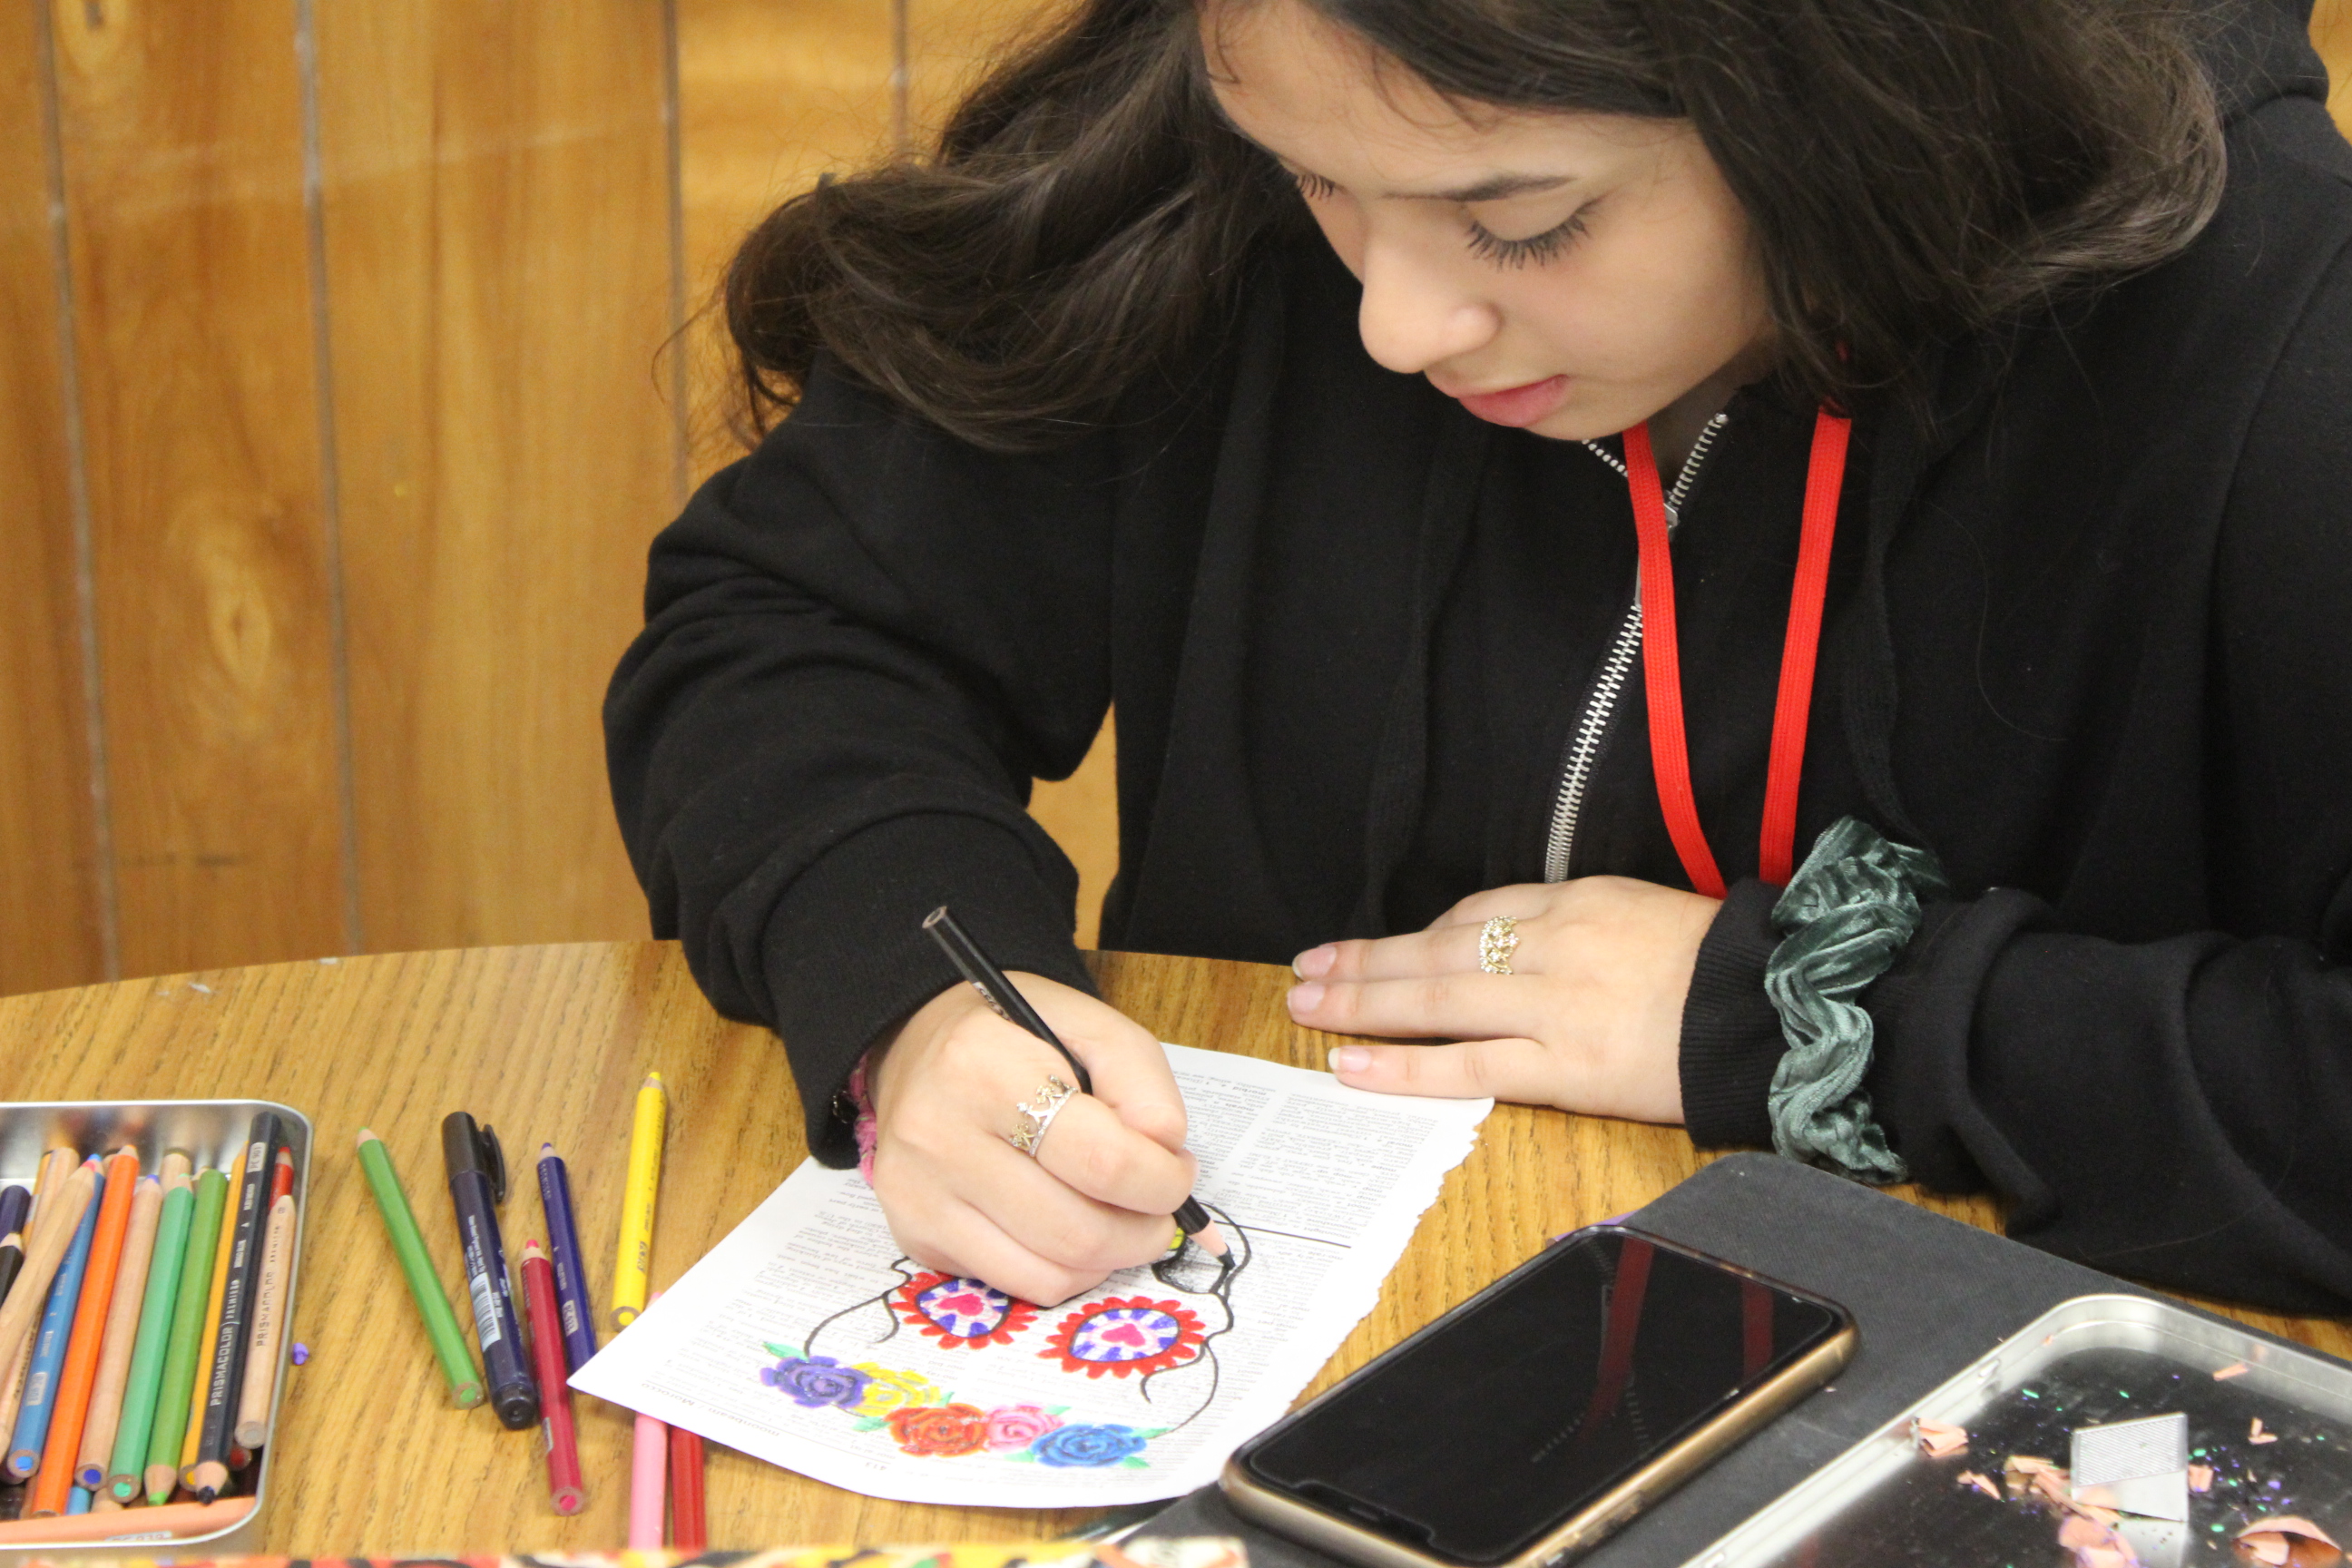 Student working on artwork